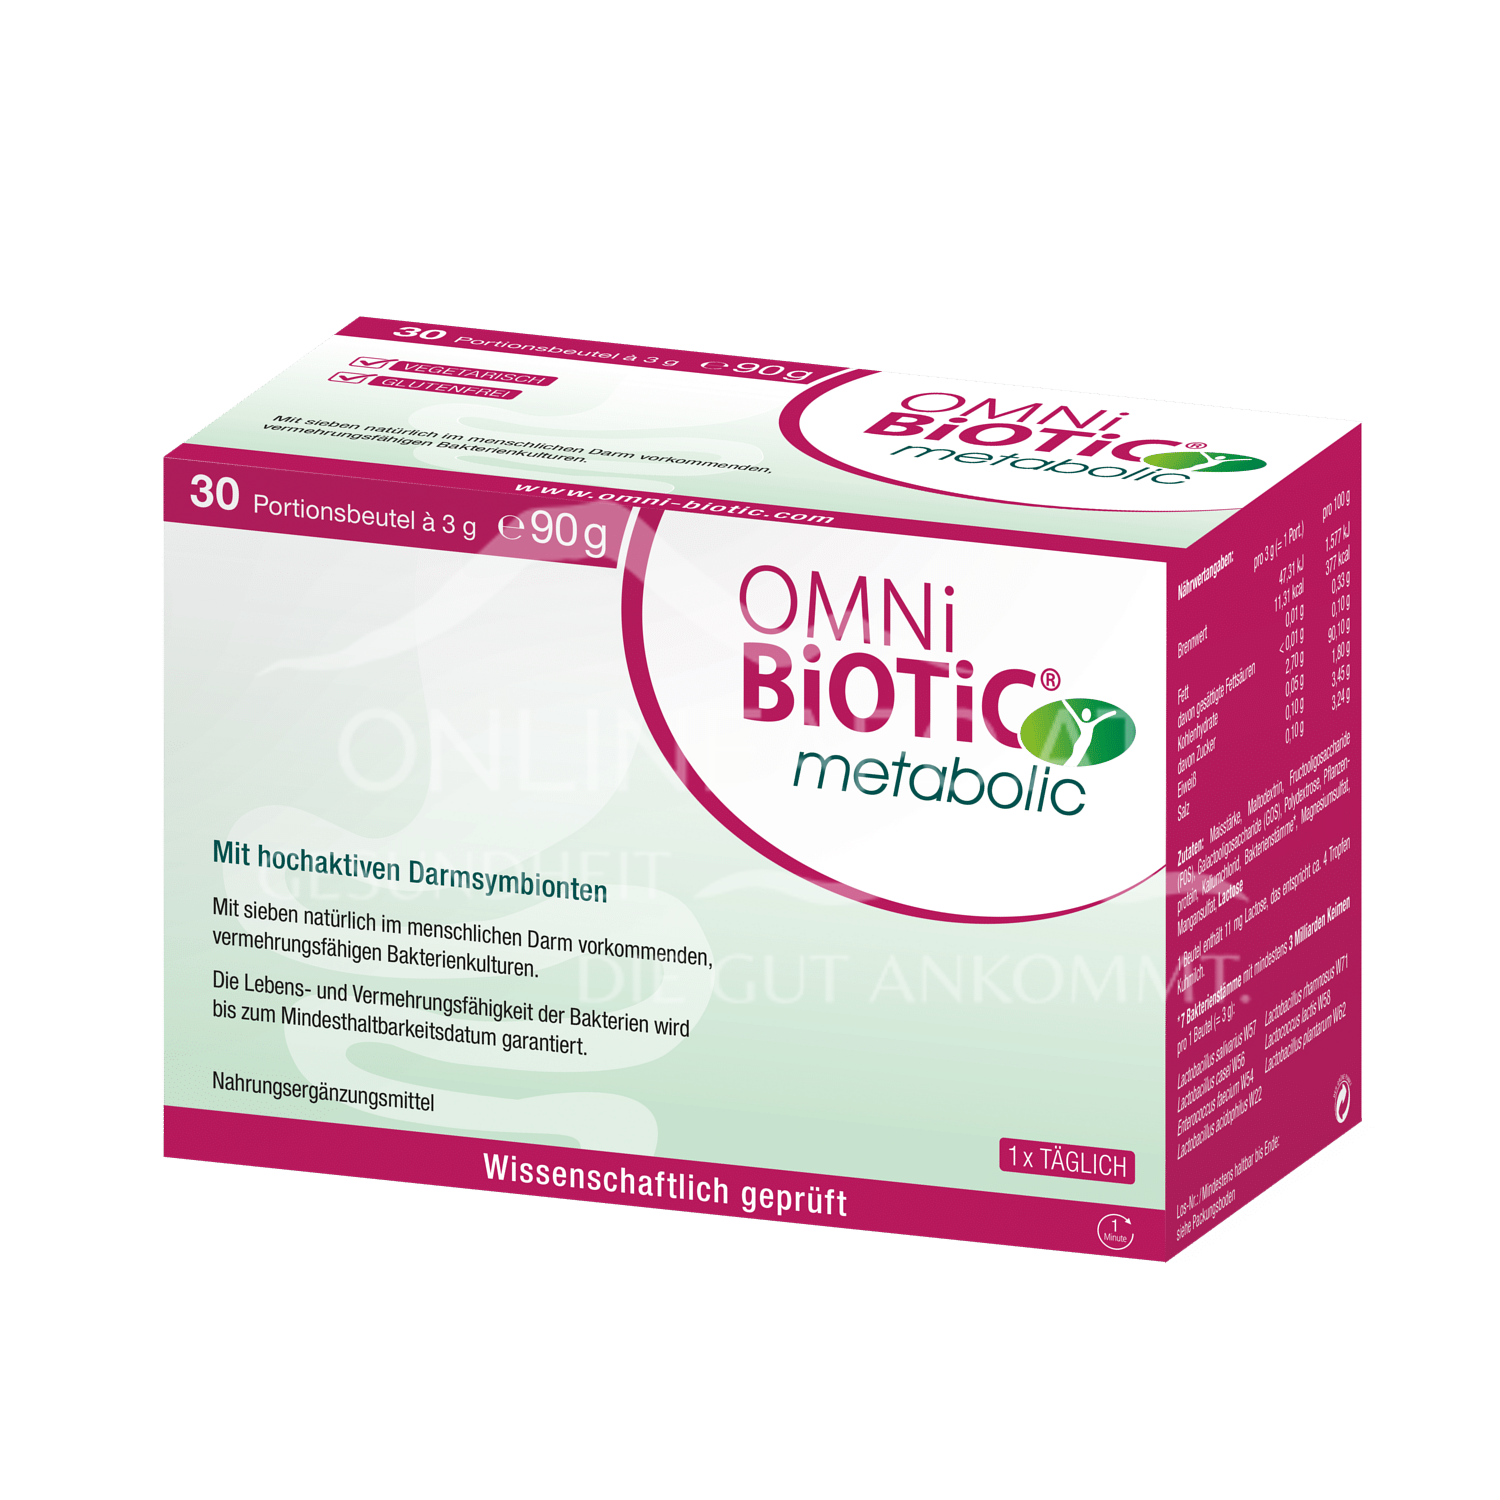 OMNi-BiOTiC® metabolic Sachets